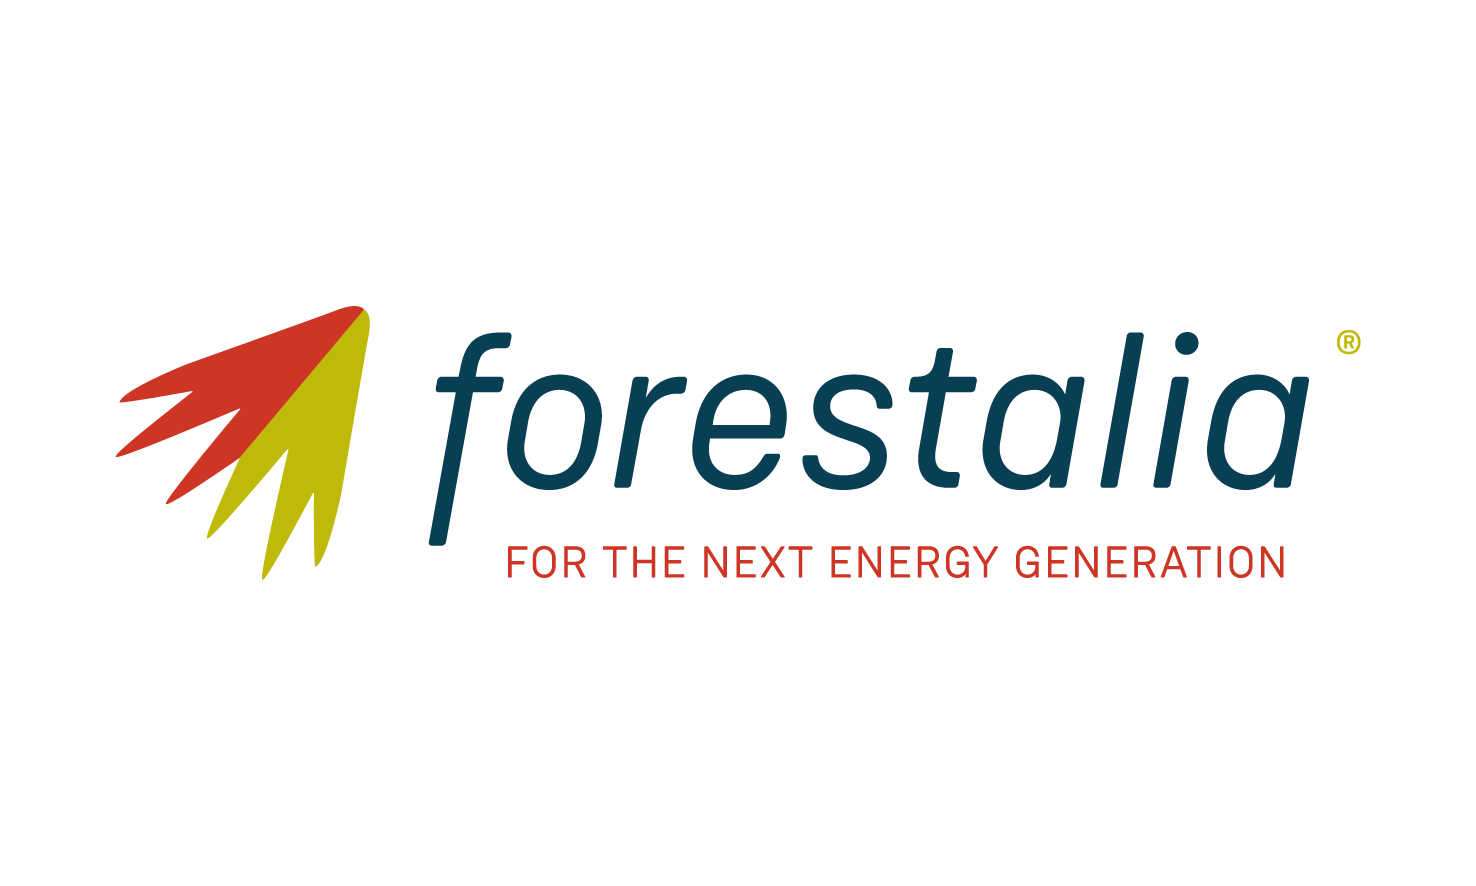 Logo Forestalia